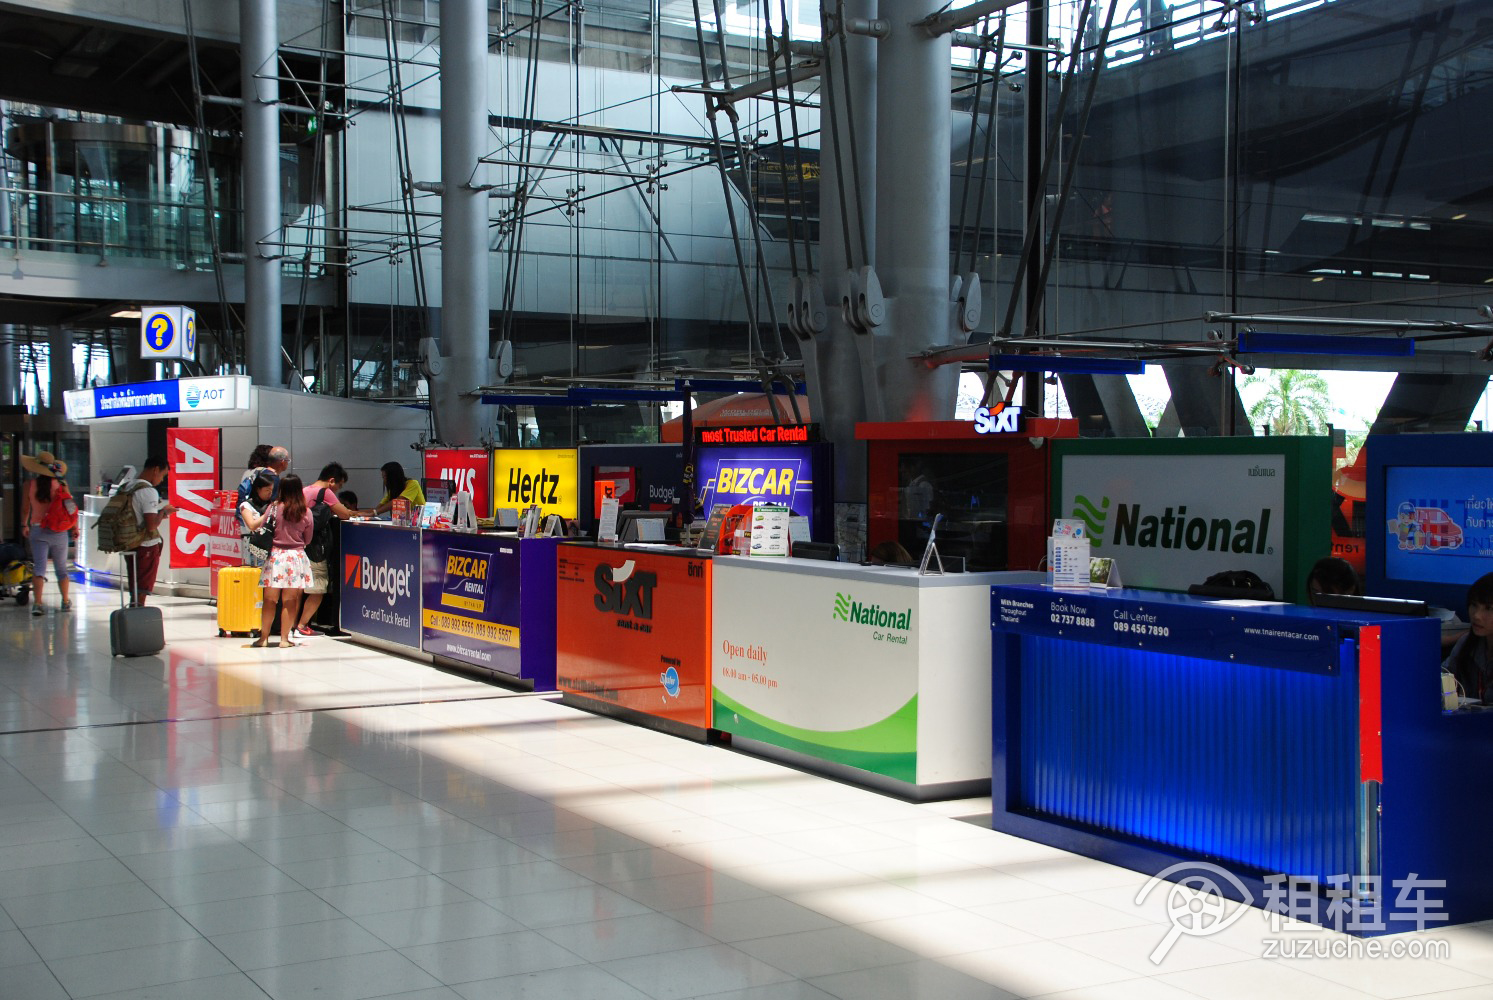 National-Sydney Airport International-51225-store